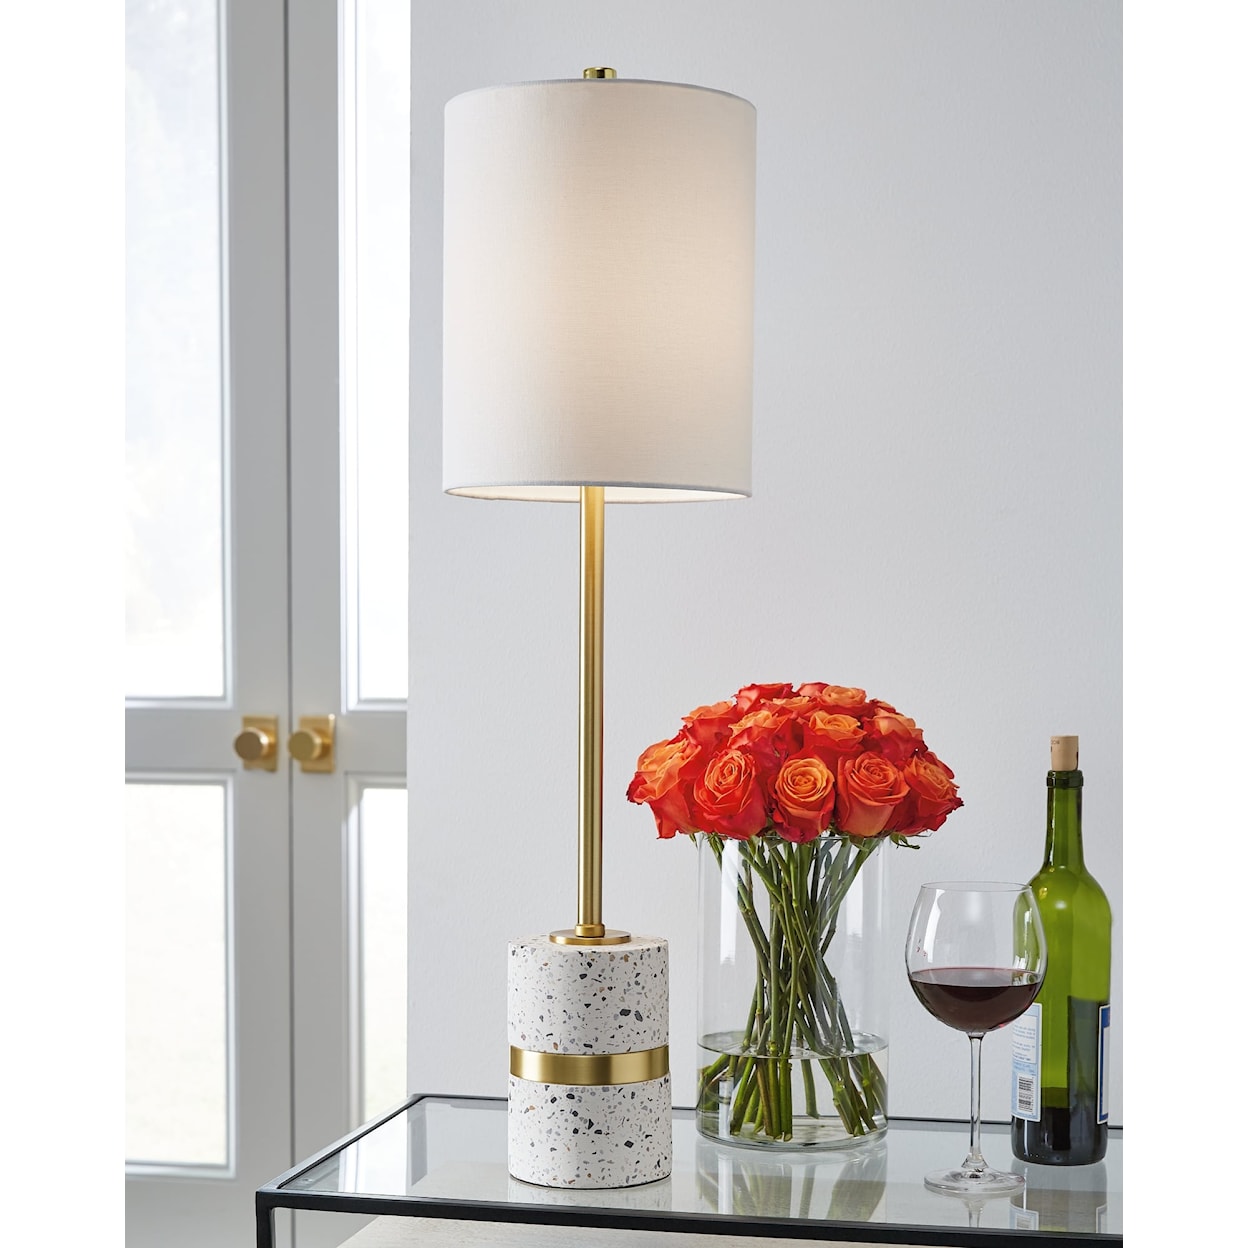 Signature Design Maywick Table Lamp